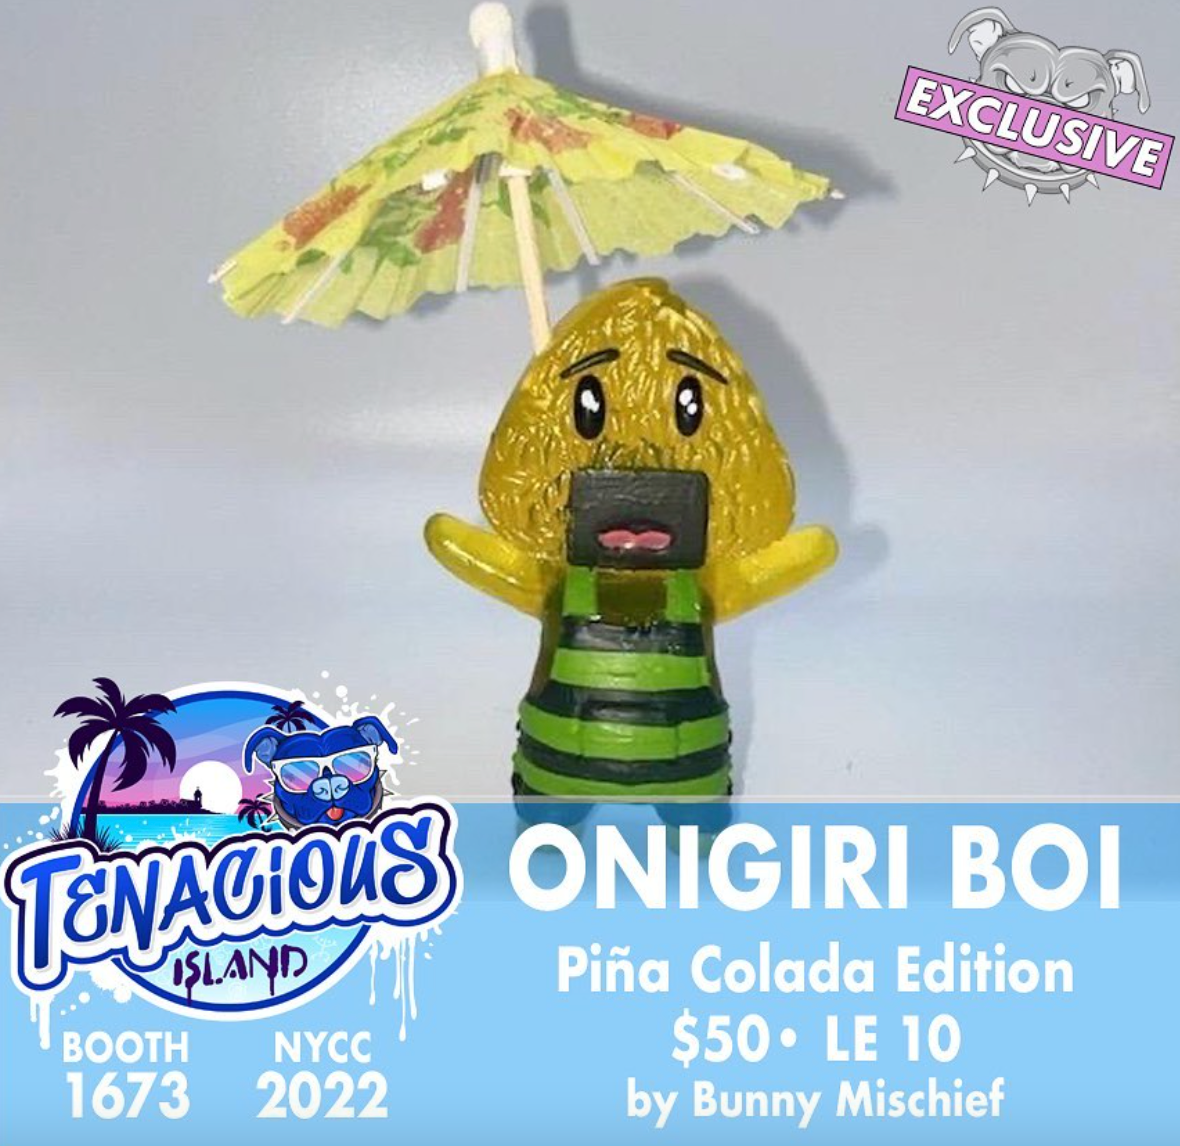 Onigiri Boi resin figure by Bunny Mischief NYCC Exclusive Tenacious Island BOOTH 1673 ! ! !